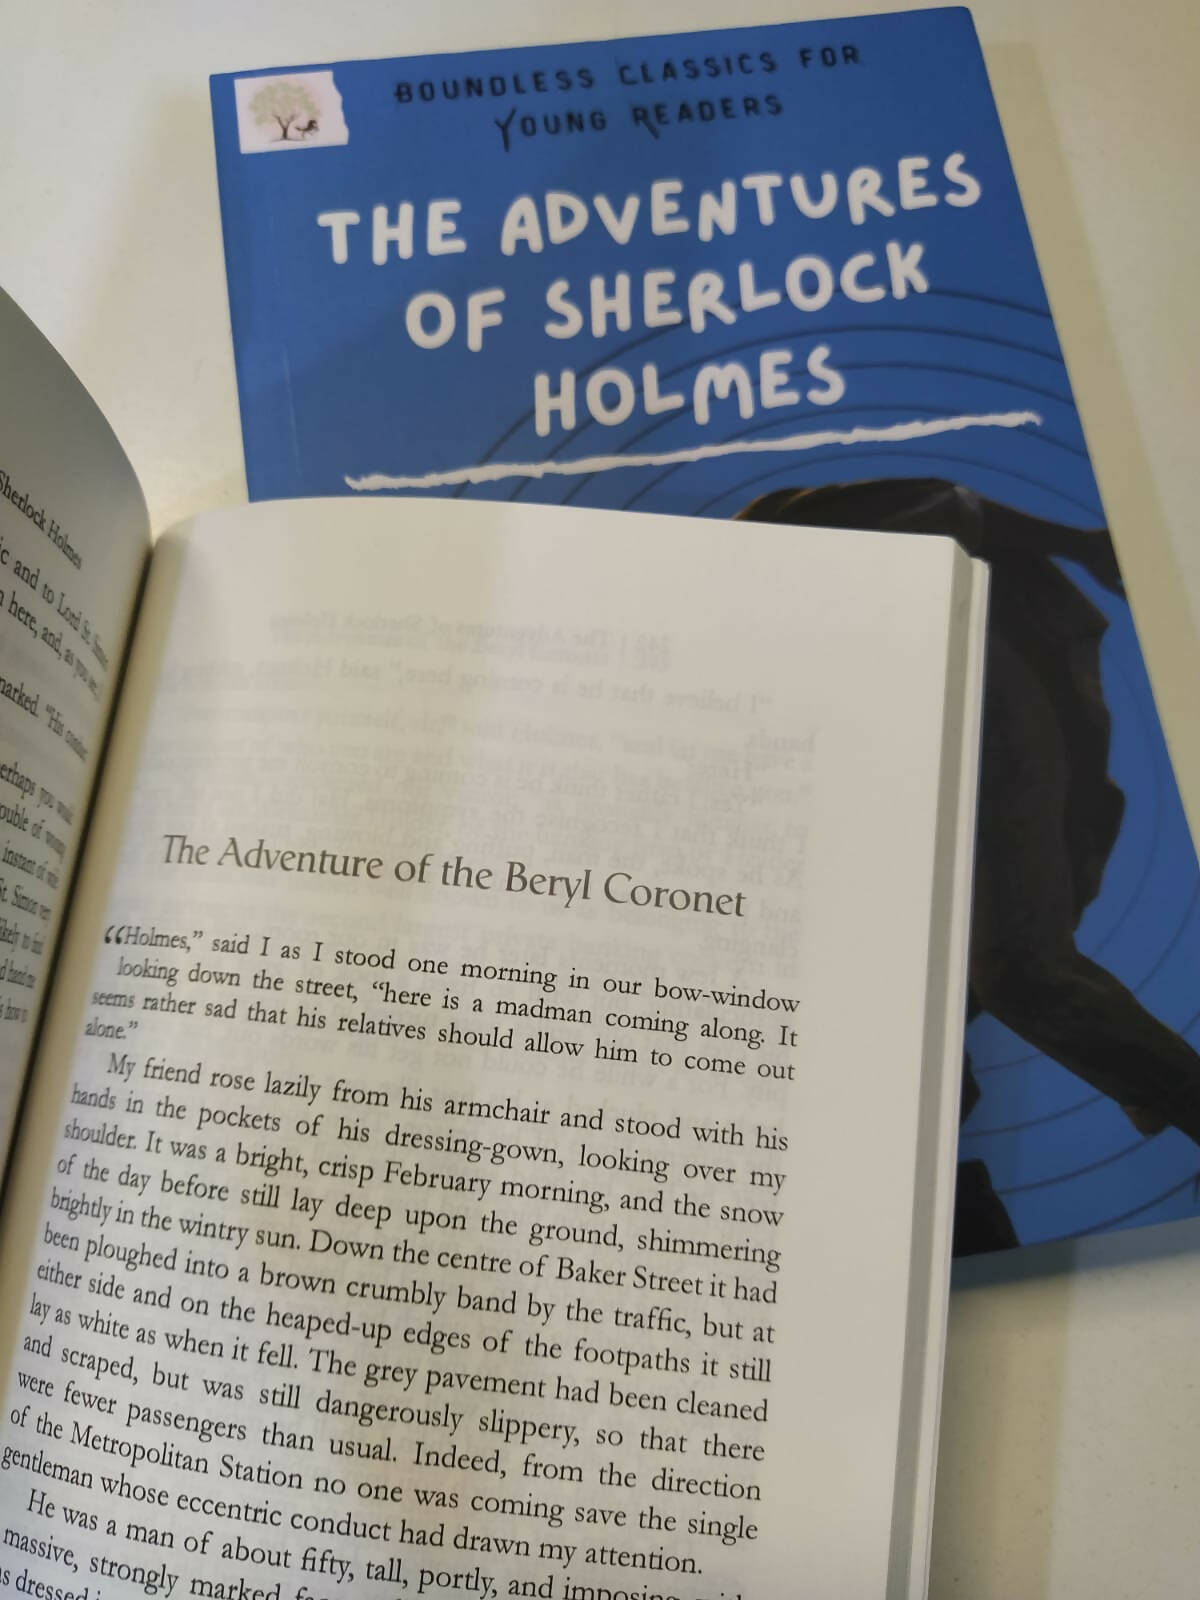 The Adventures oF Sherlock Holmes